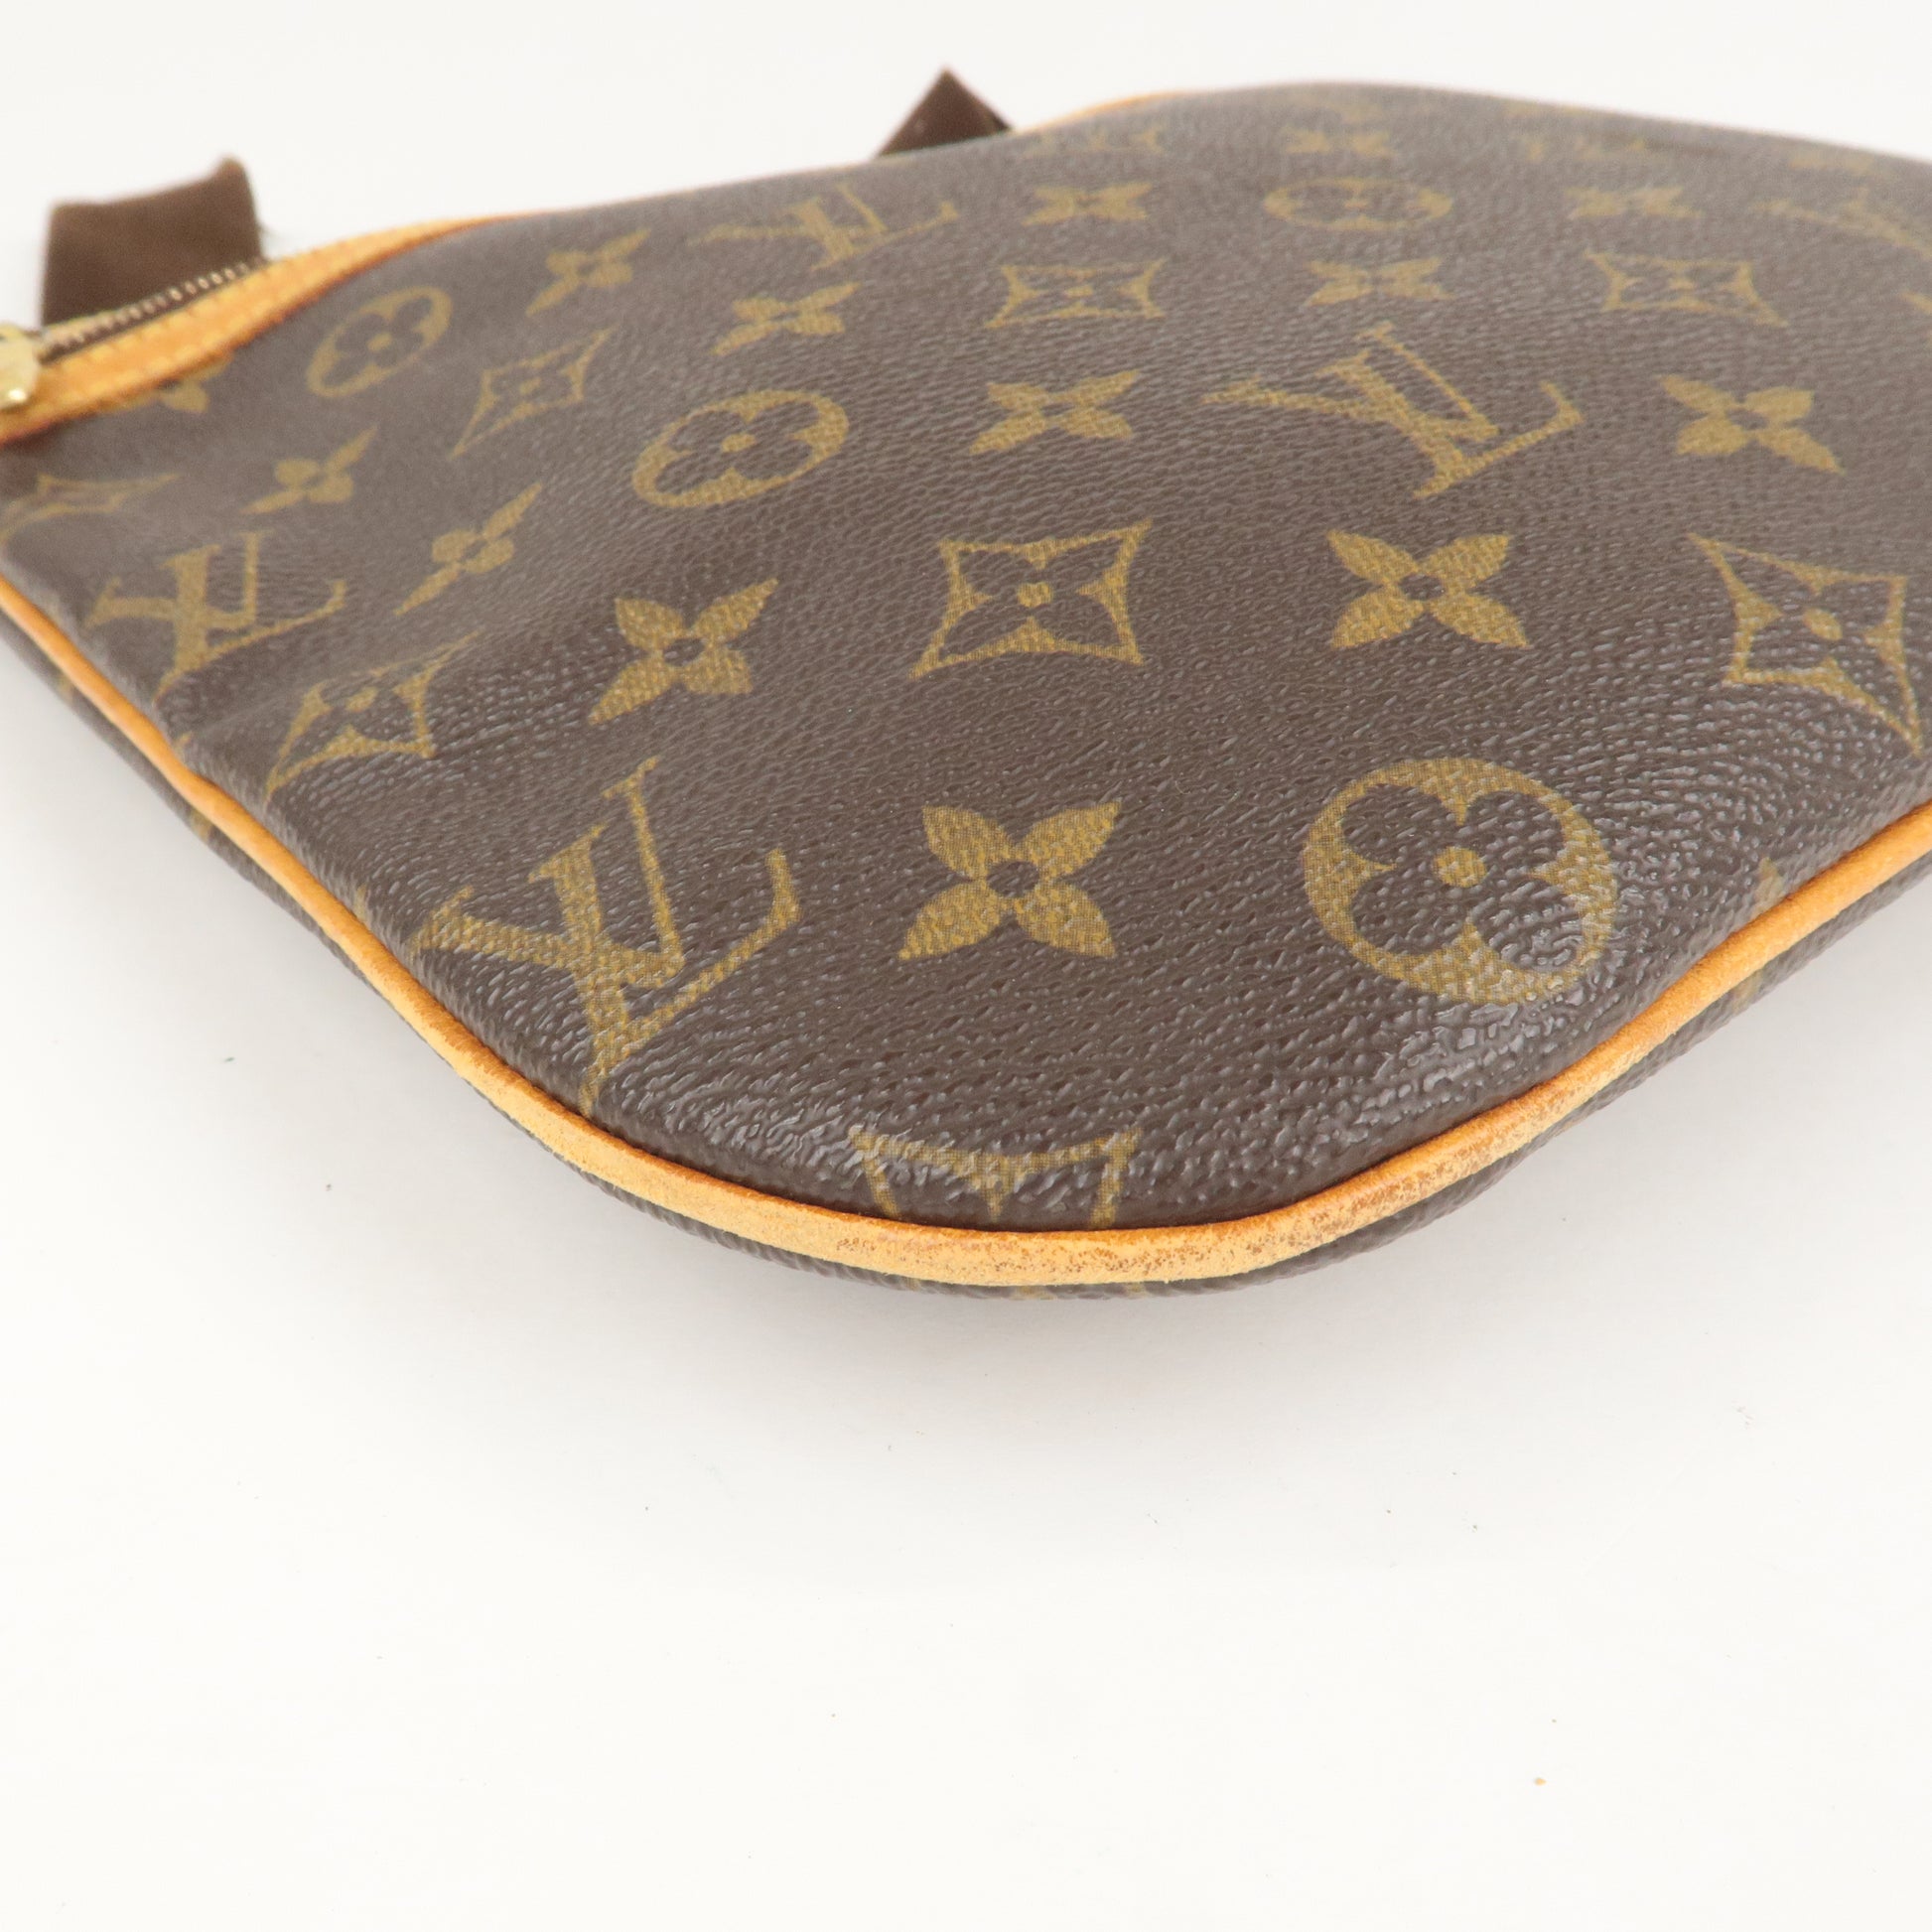 Louis Vuitton Pochette Bosphore M40044 Monogram Canvas Crossbody Bag Brown